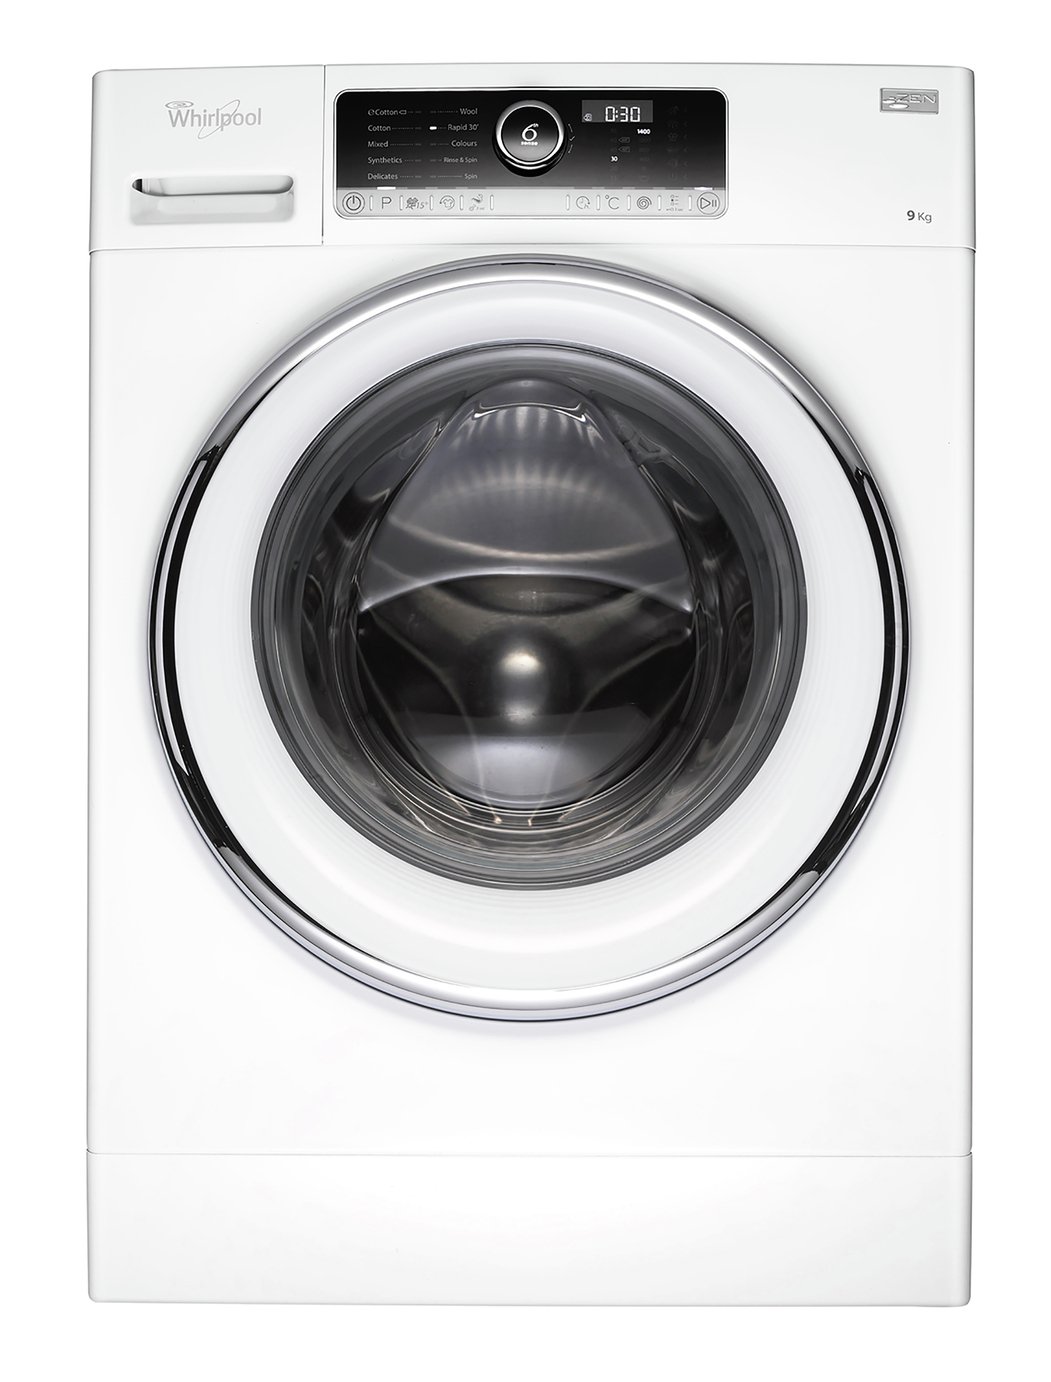 Whirlpool FSCR90420 9KG 1400 Spin Washing Machine - White